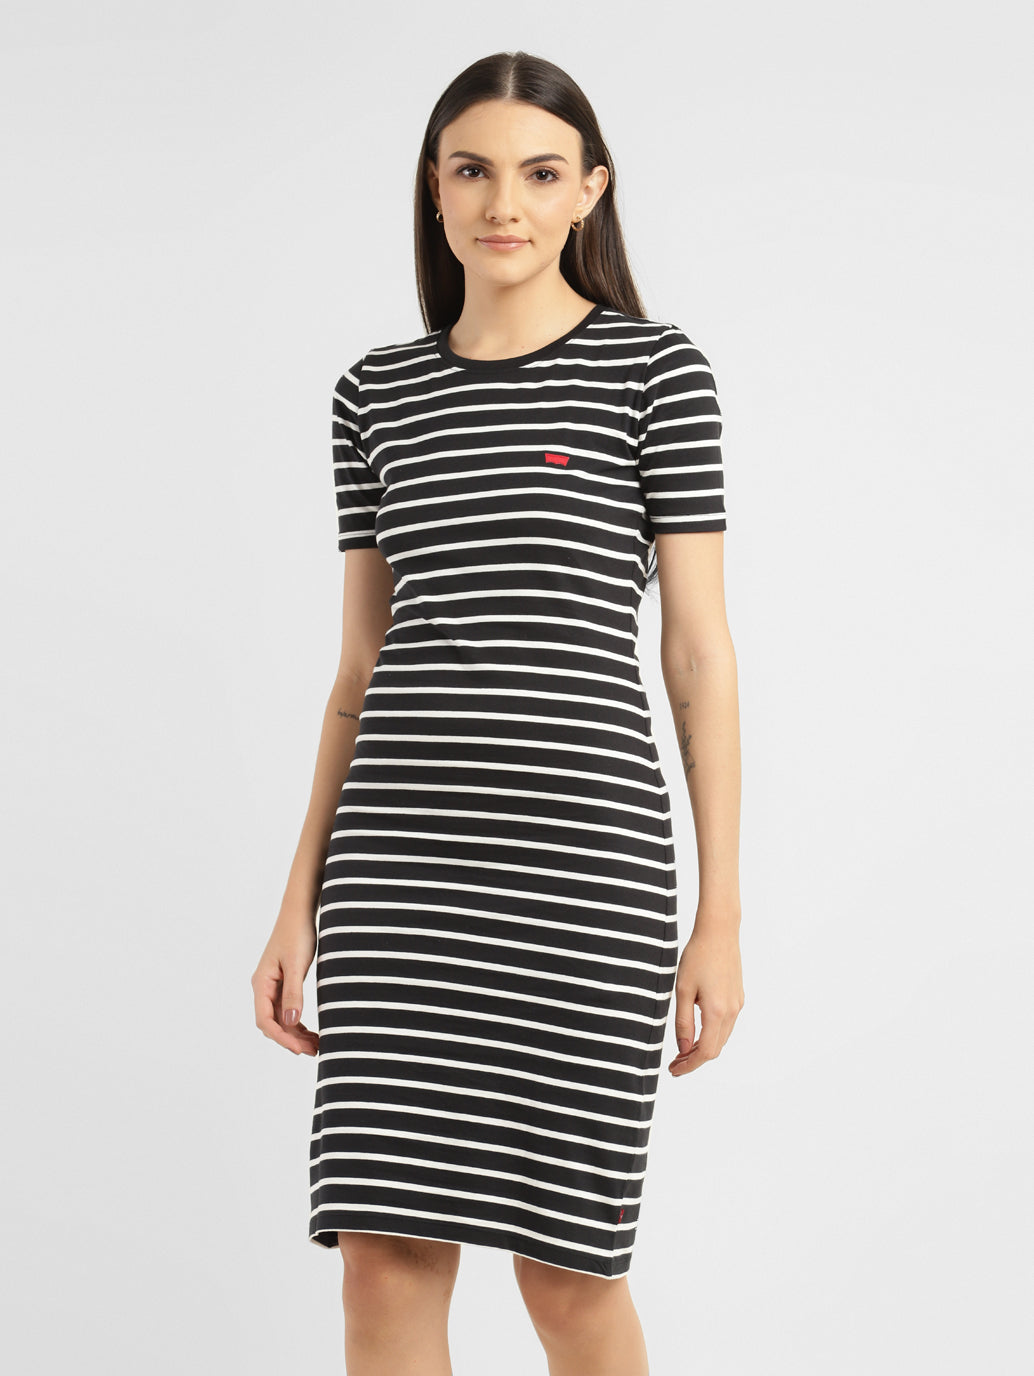 Women's Striped Round Neck Dress